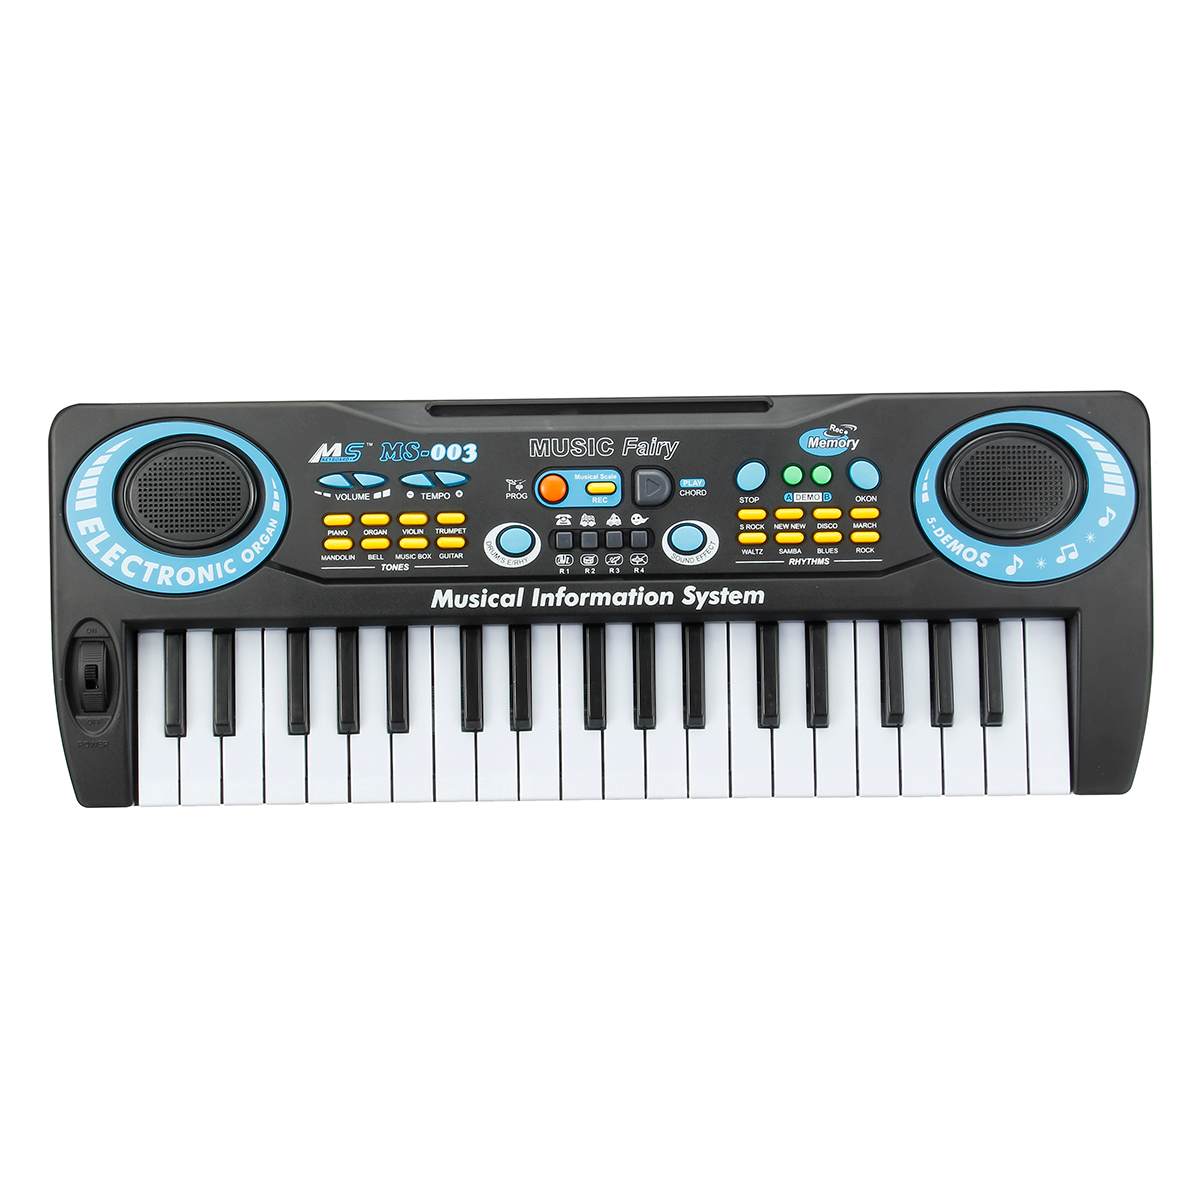 37- nøgle sort digital musik elektronisk tastatur nøglebræt elektrisk klaver børn med mikrofon musikinstrument